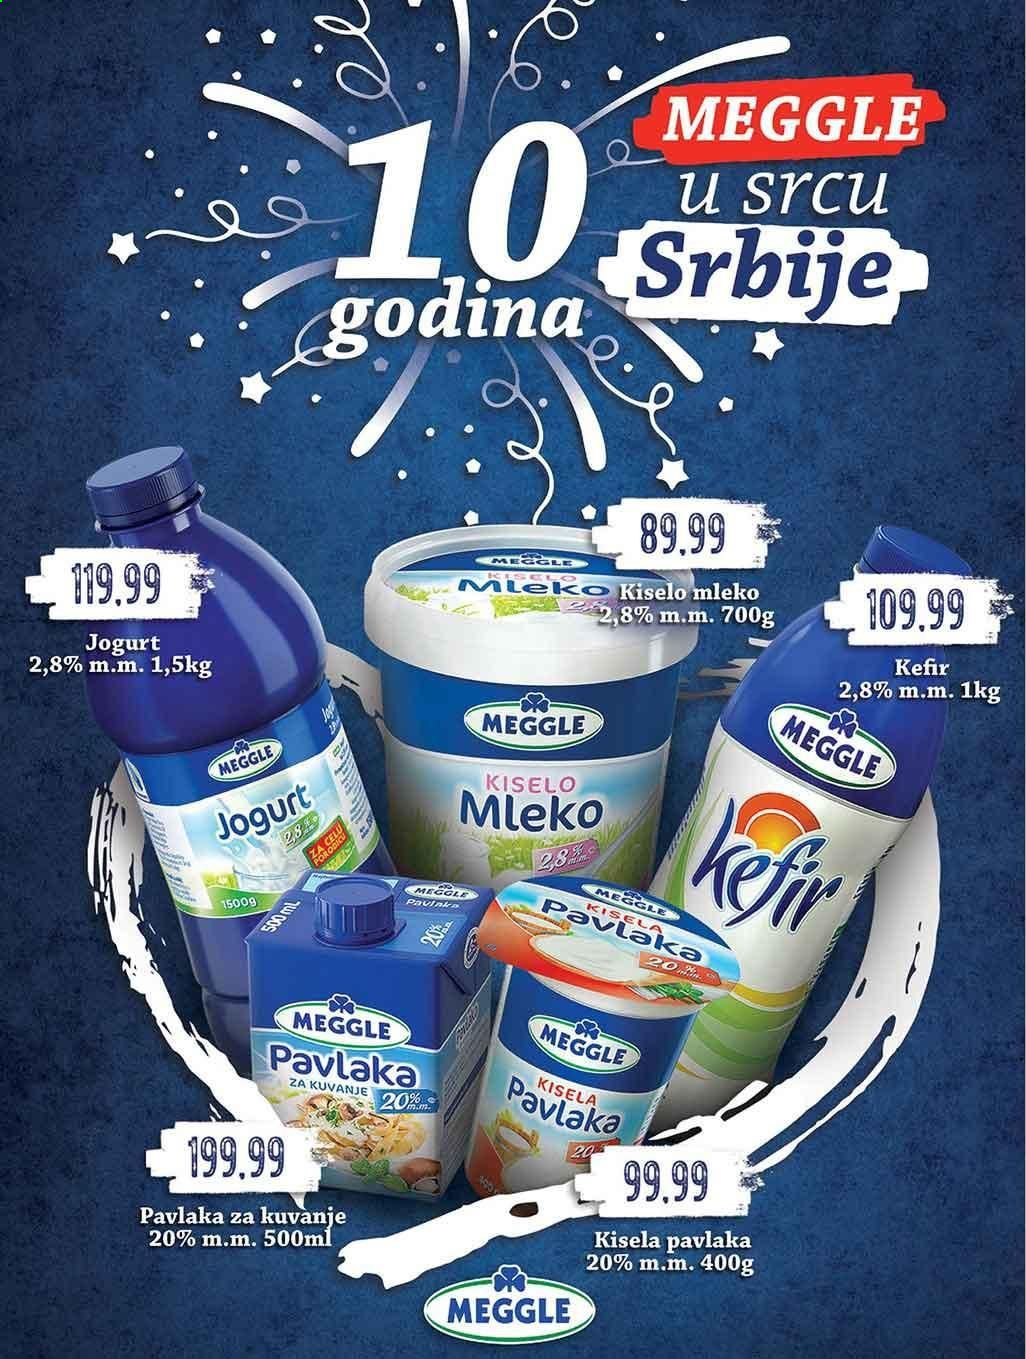 Gomex katalog - 07.05.2021 - 20.05.2021 - Proizvodi na akciji - Meggle, jogurt, kefir, kiselo mleko, mleko, kisela pavlaka, pavlaka. Stranica 2.